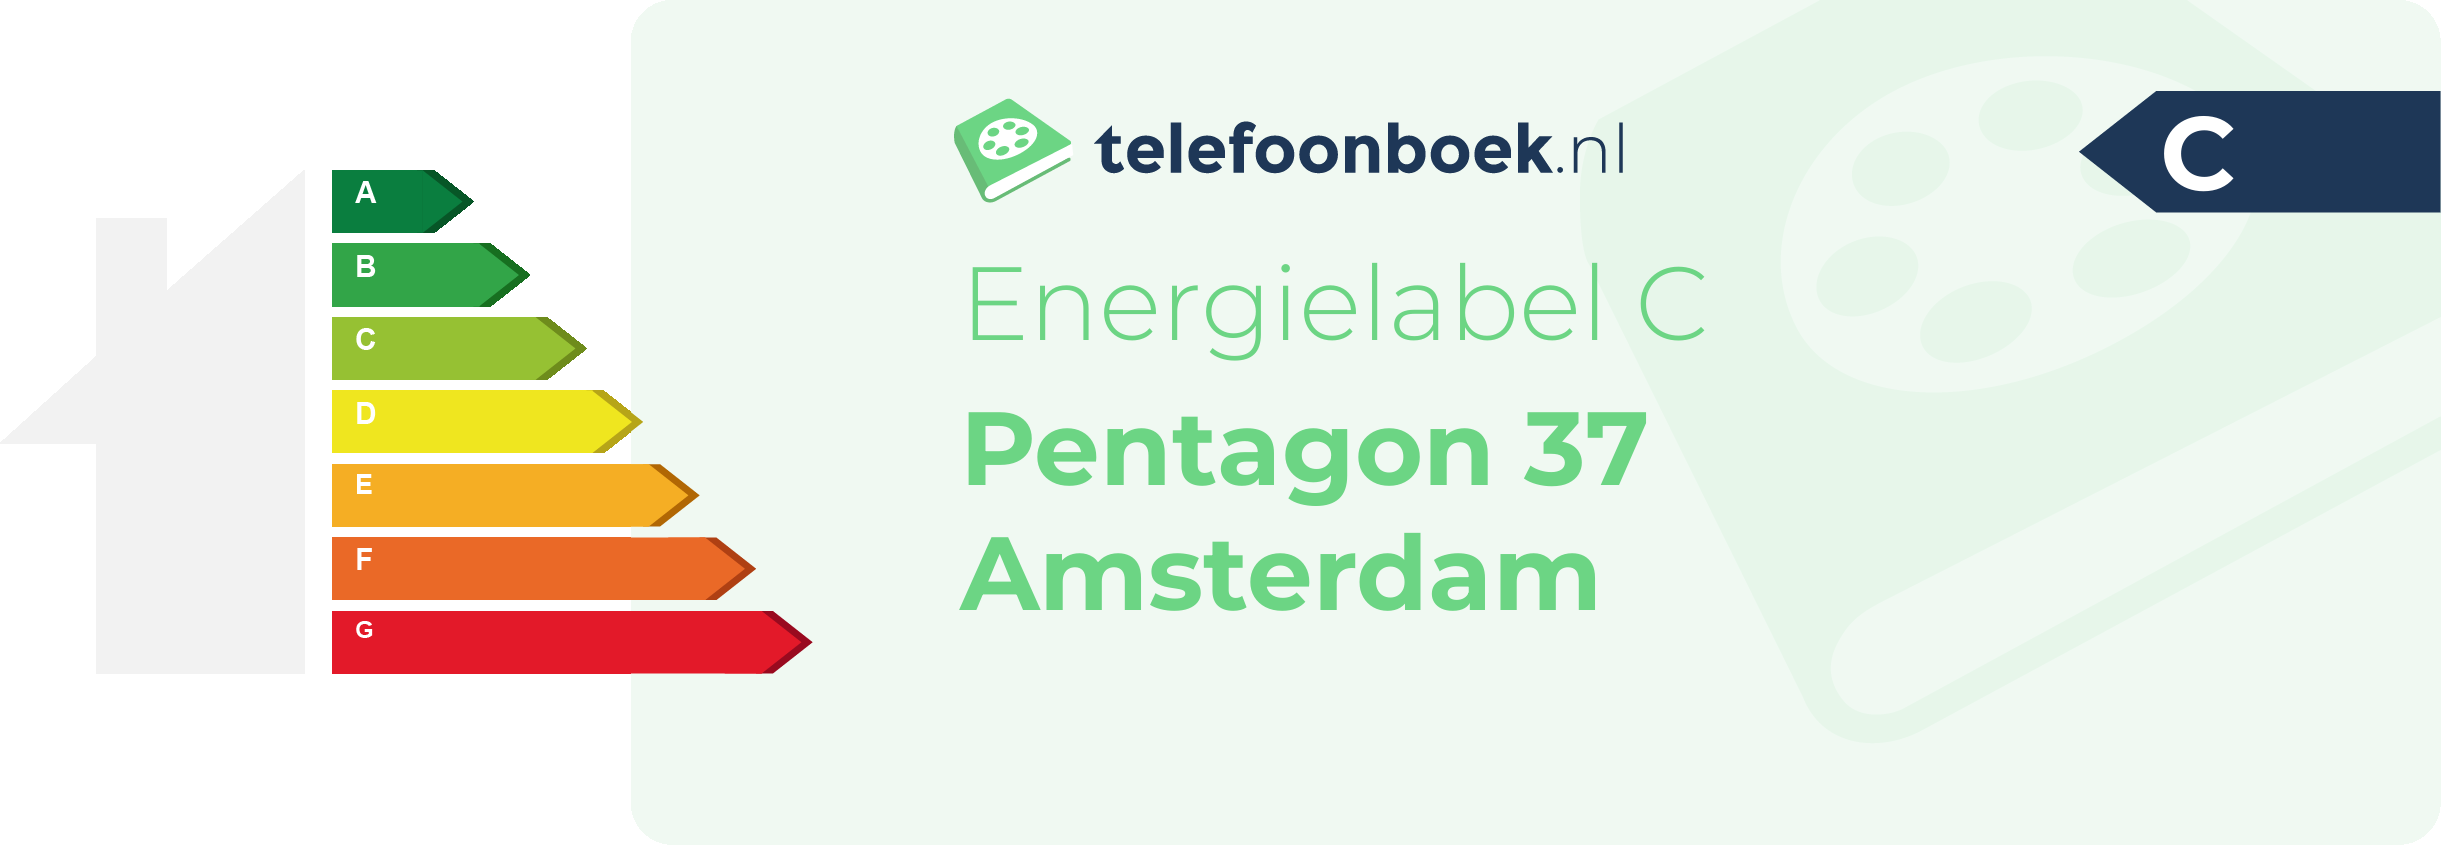 Energielabel Pentagon 37 Amsterdam